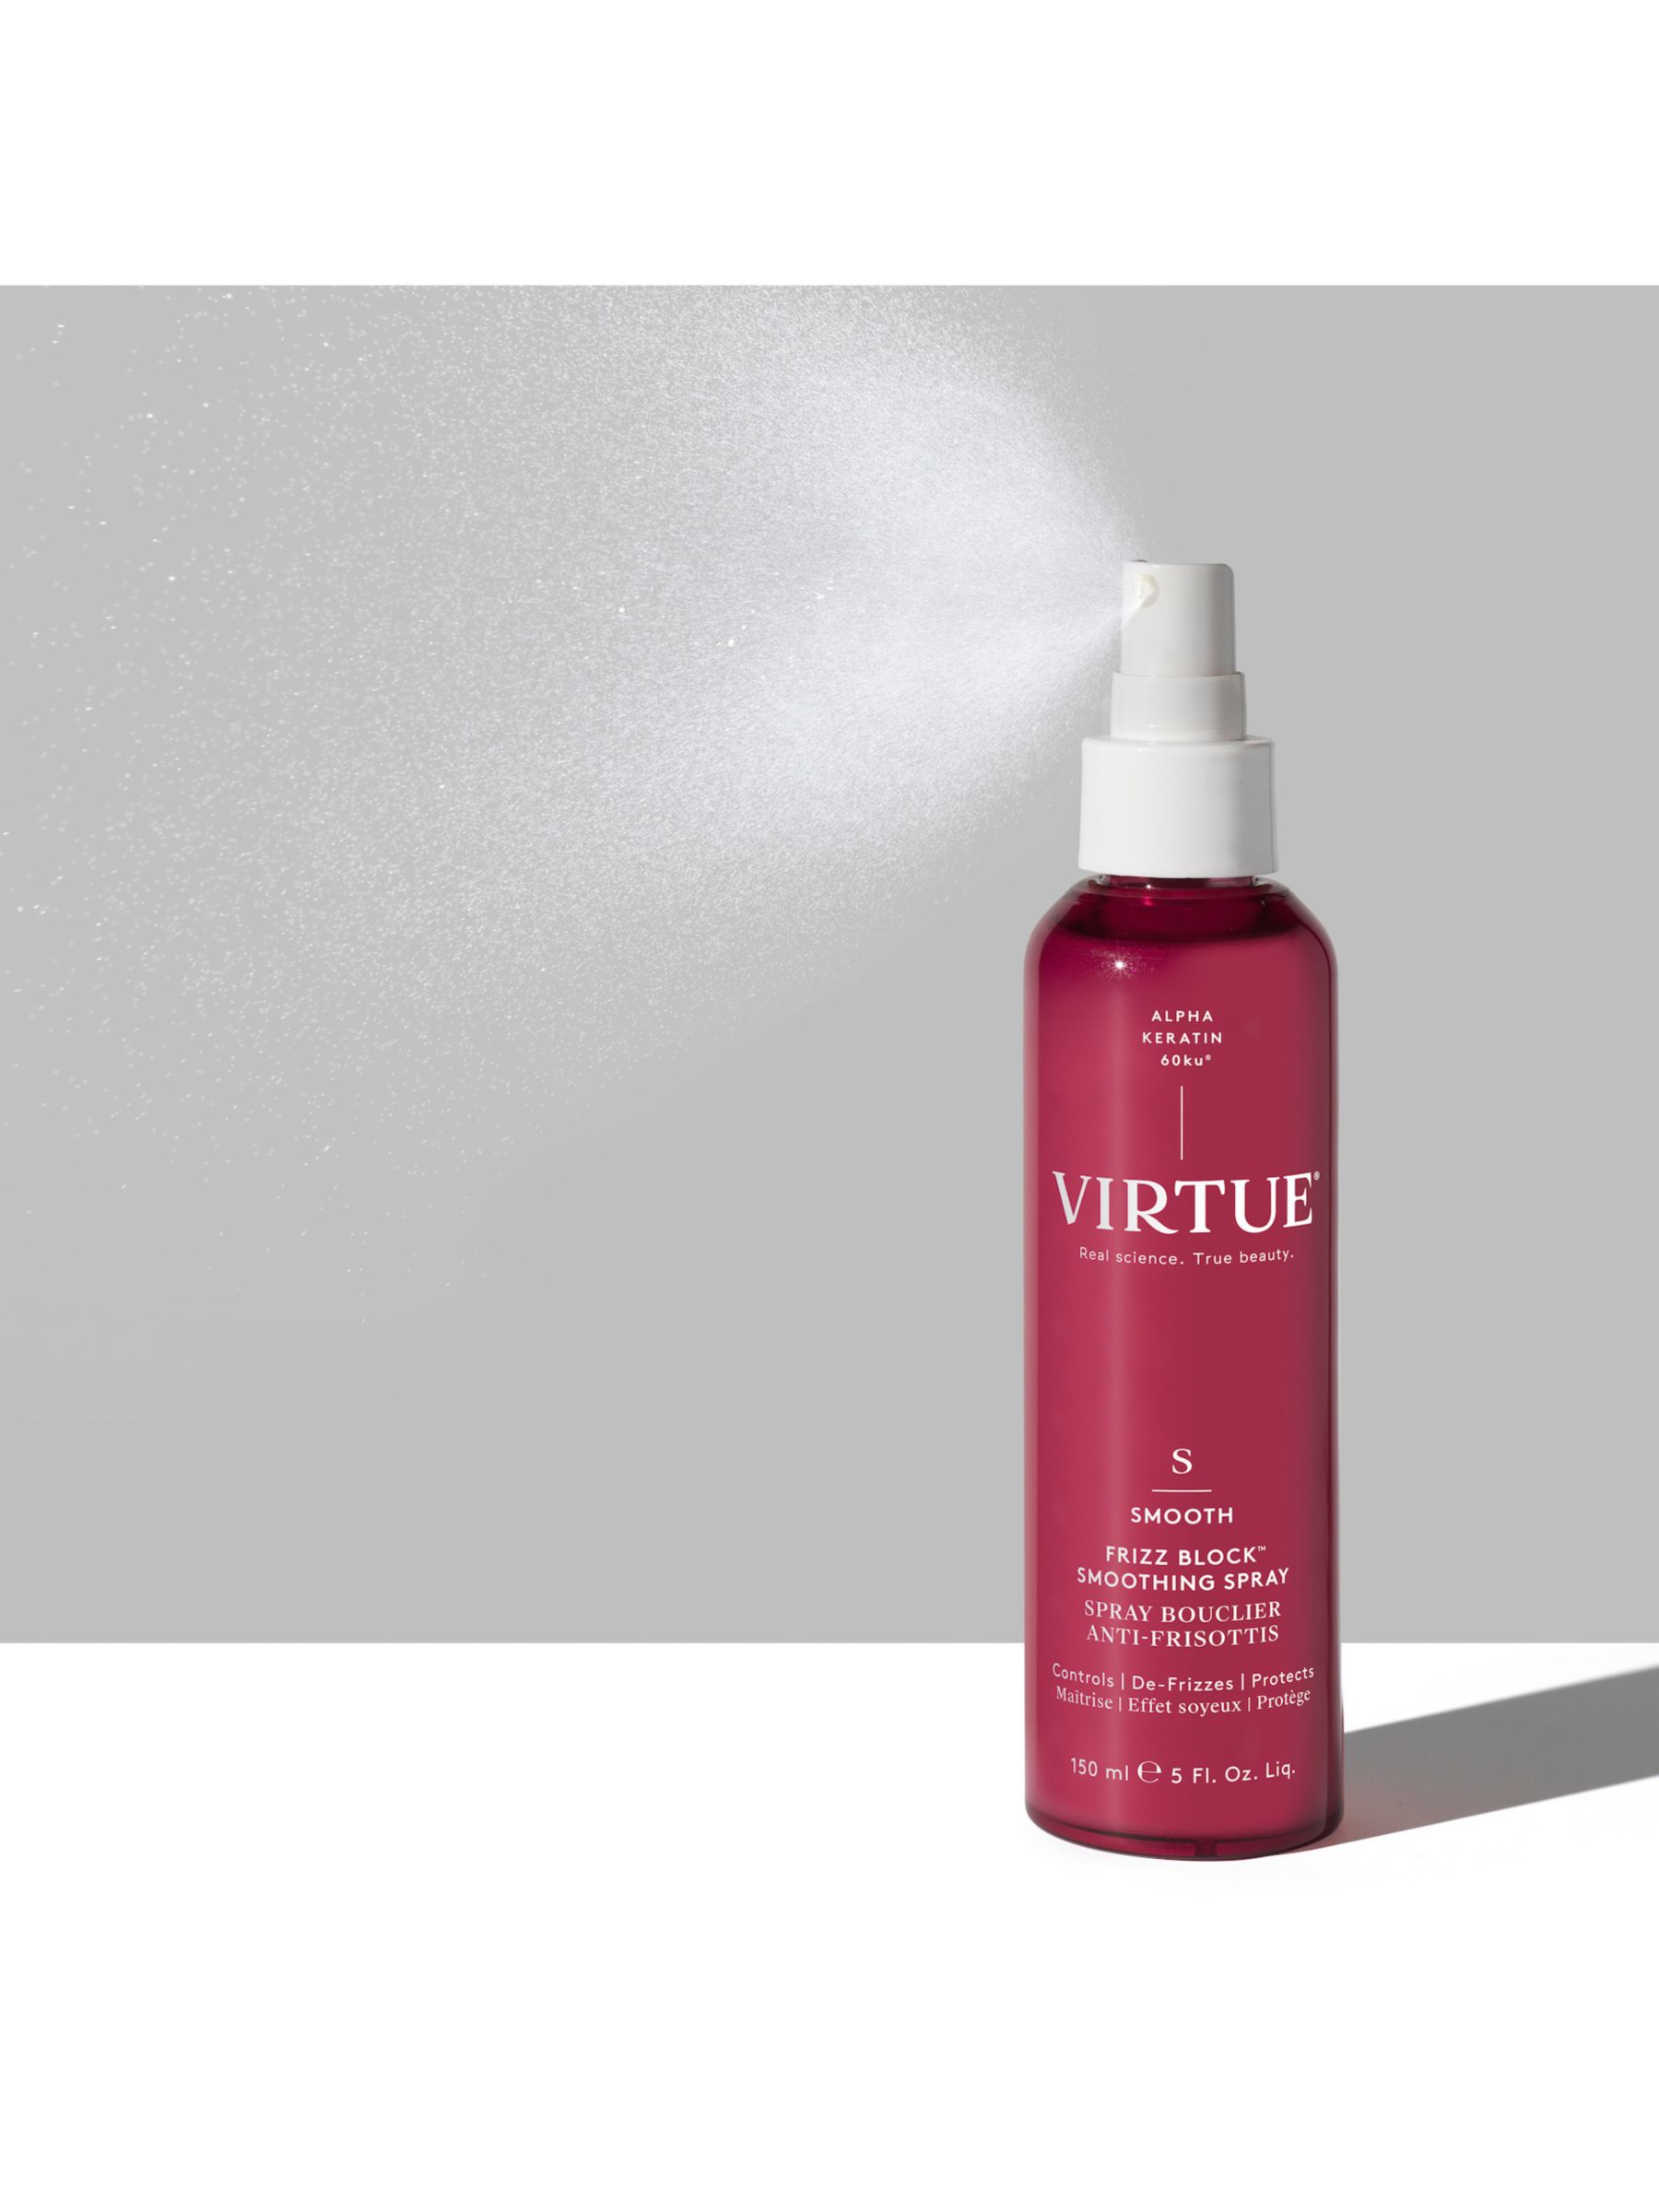 Virtue Frizz Block Smoothing Spray, 150ml 2